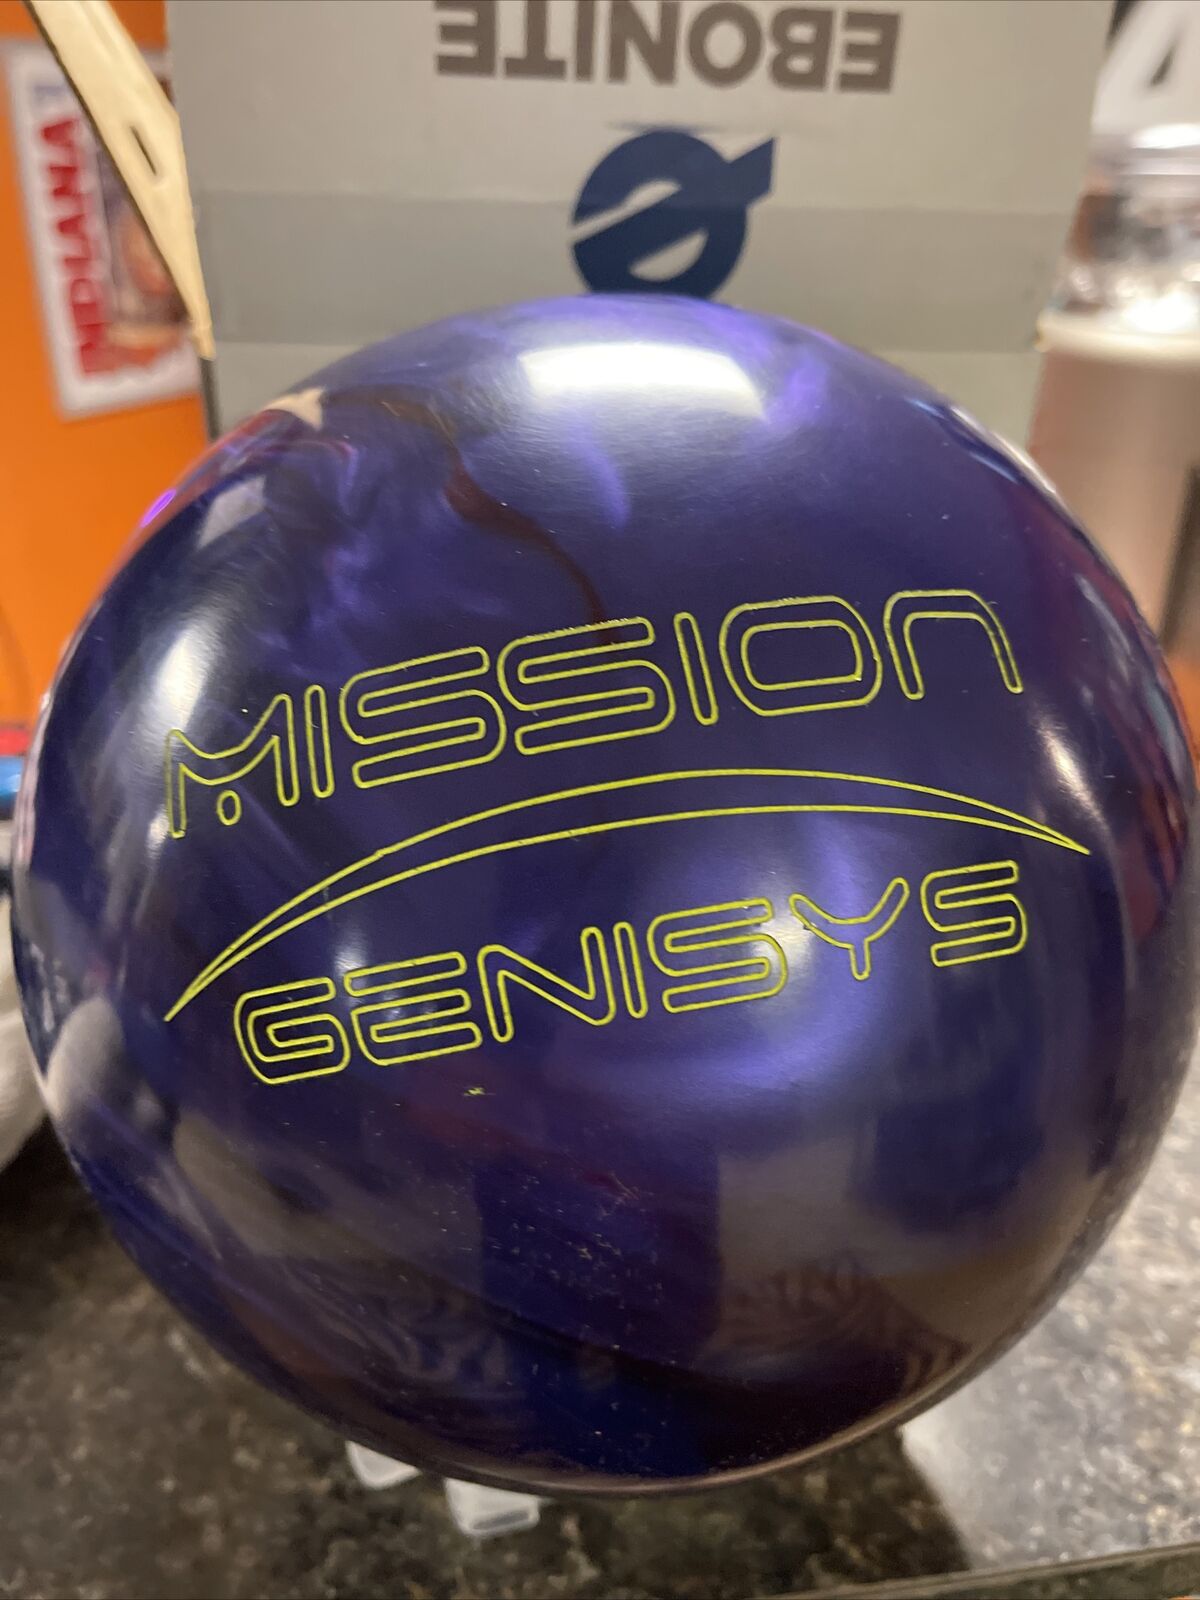 Ebonite Mission Genisys “P” International Ball